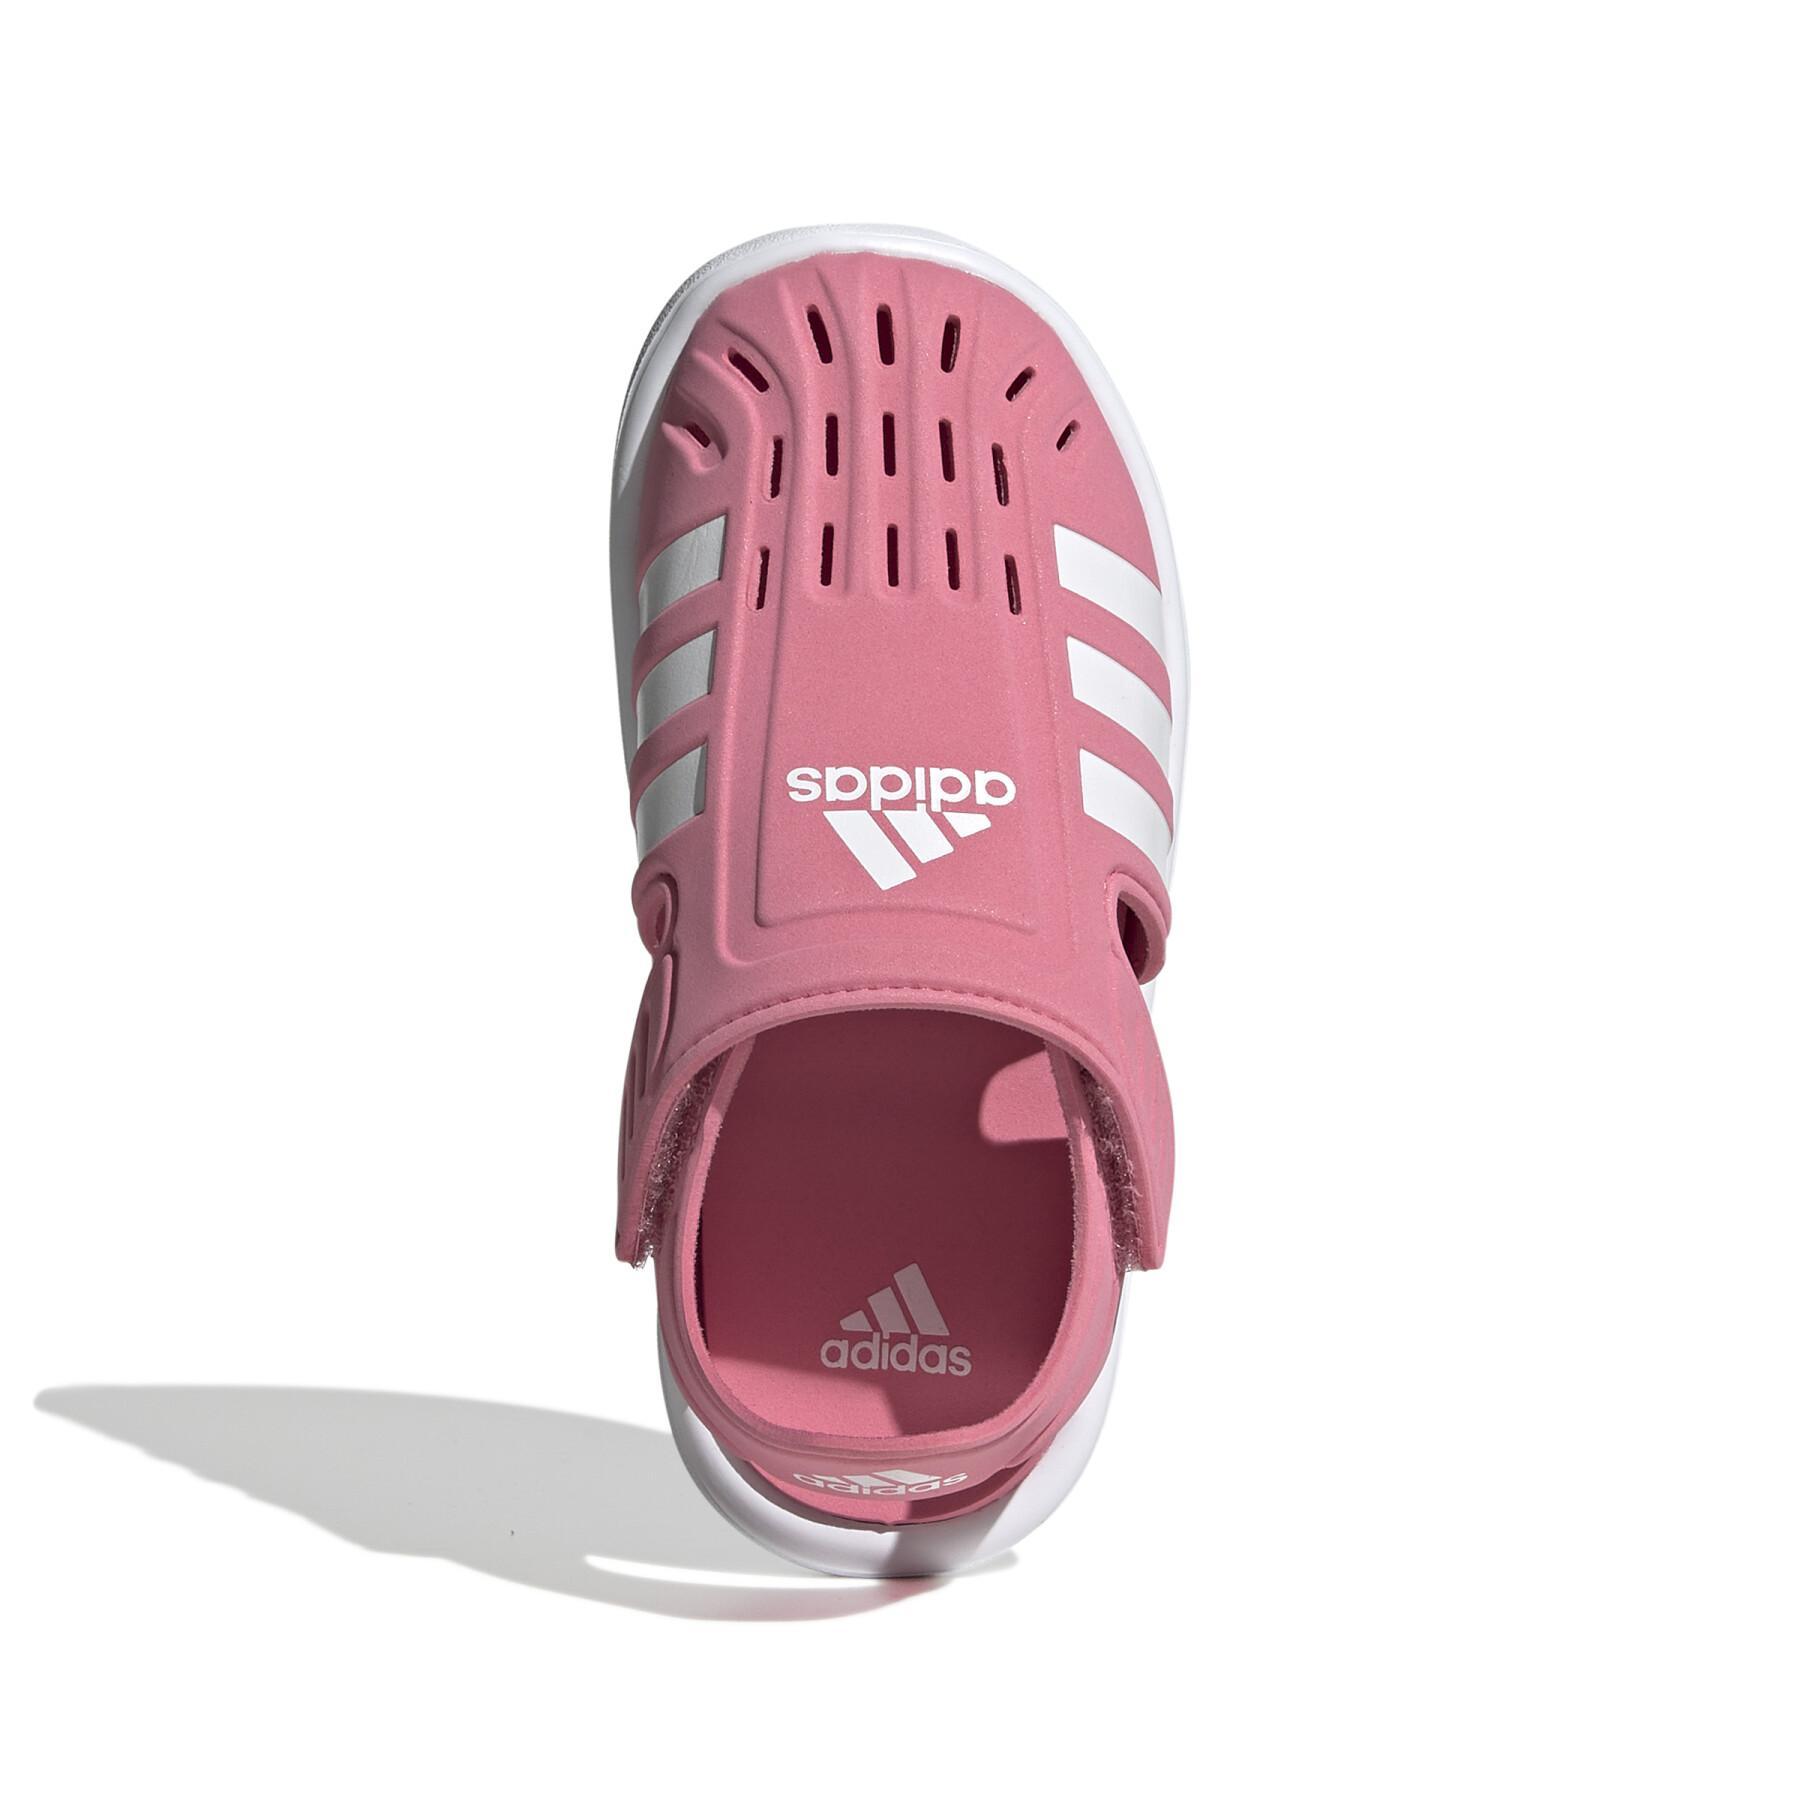 Children's sandals adidas Summer Closed Toe Water